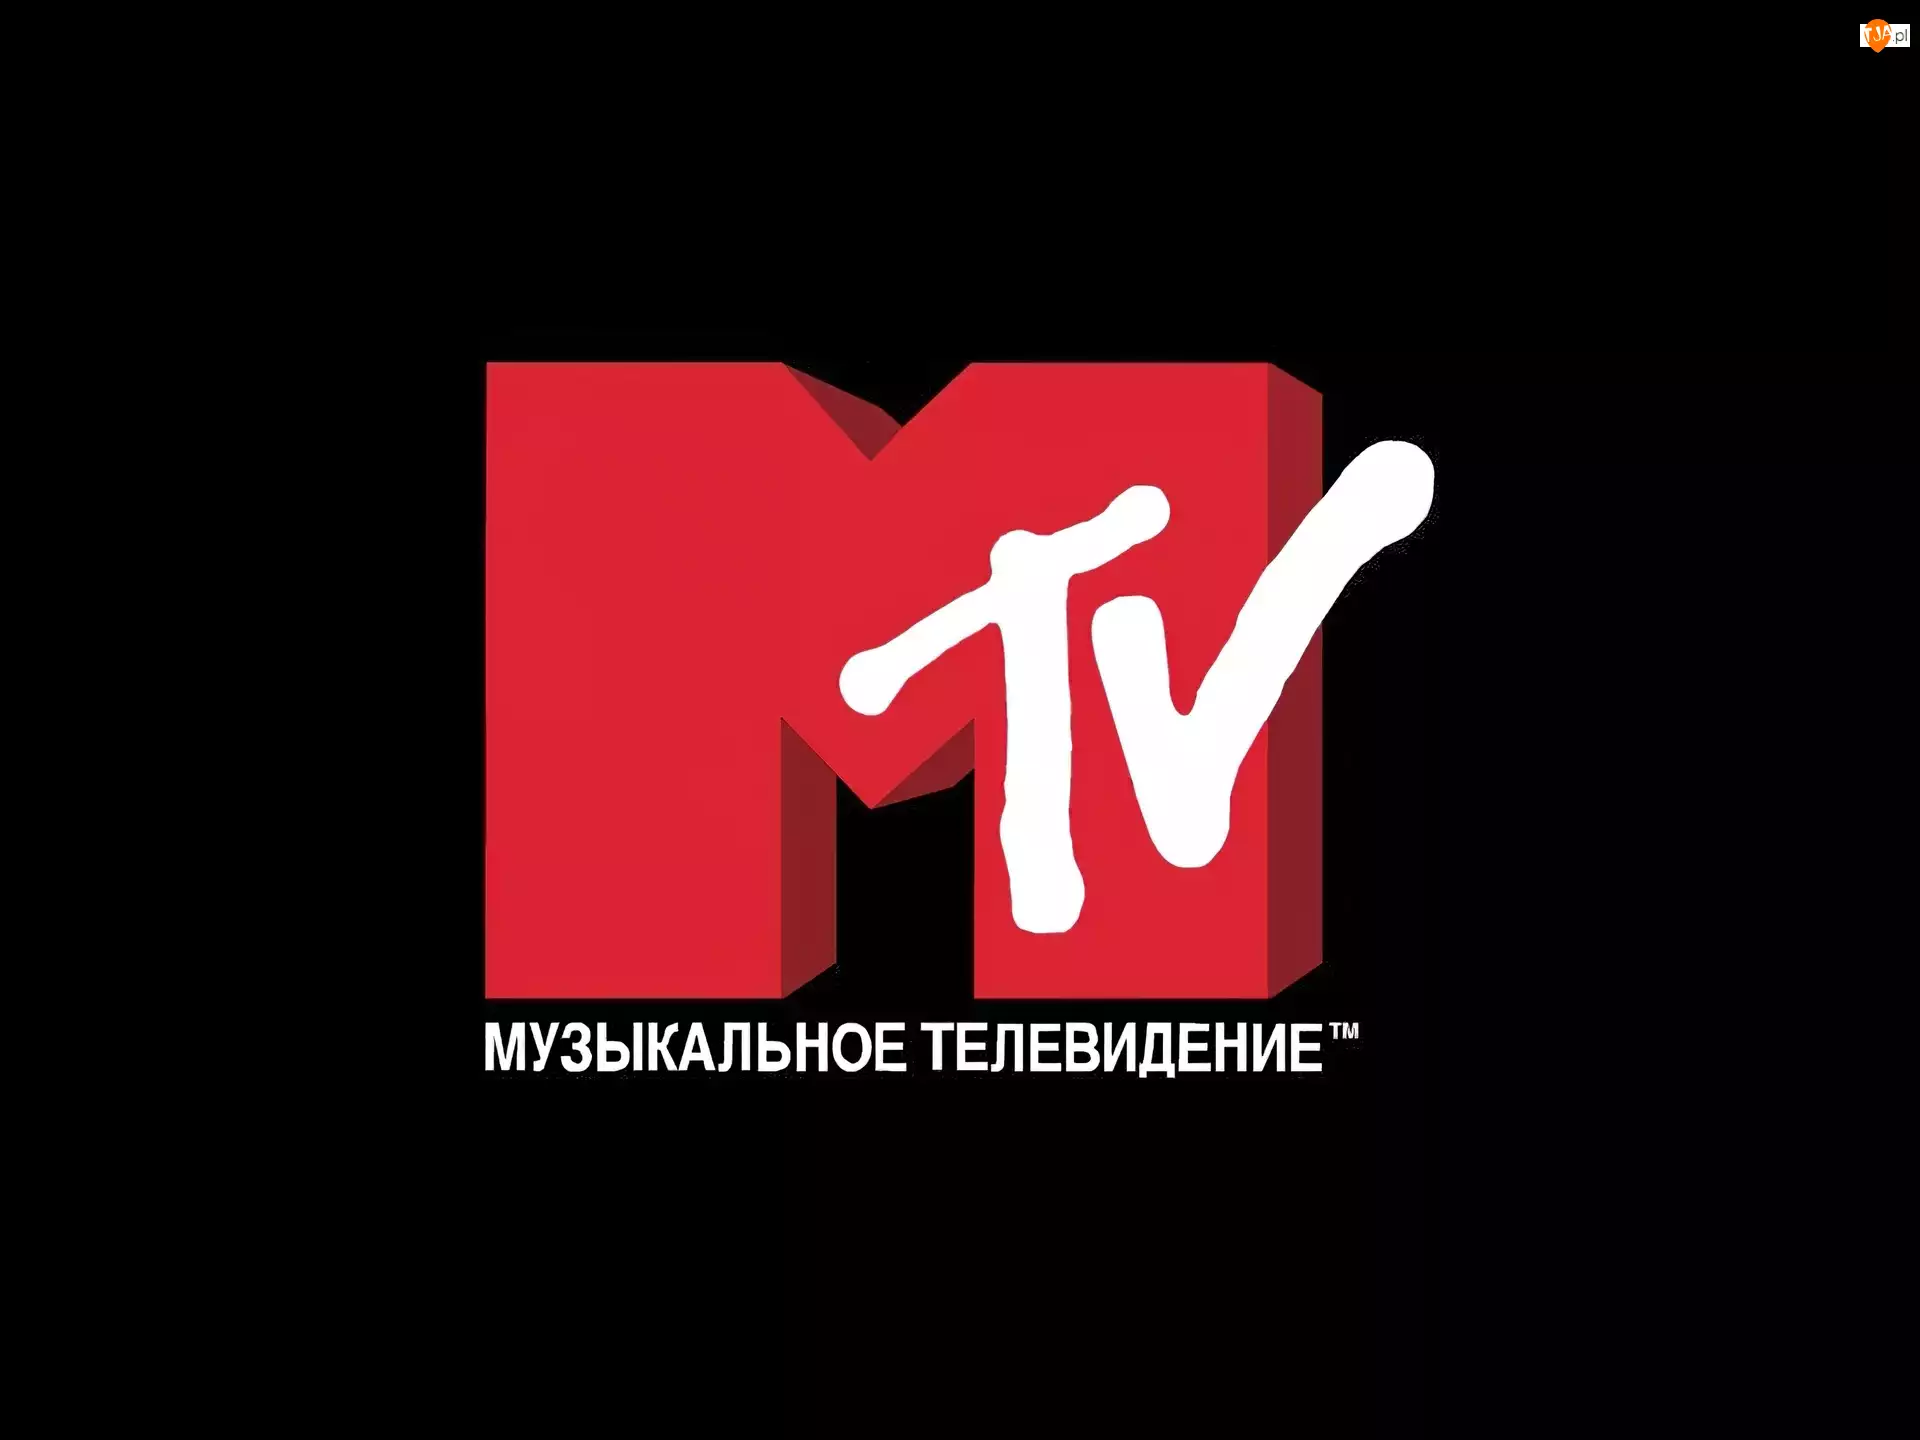 Logo, MTV